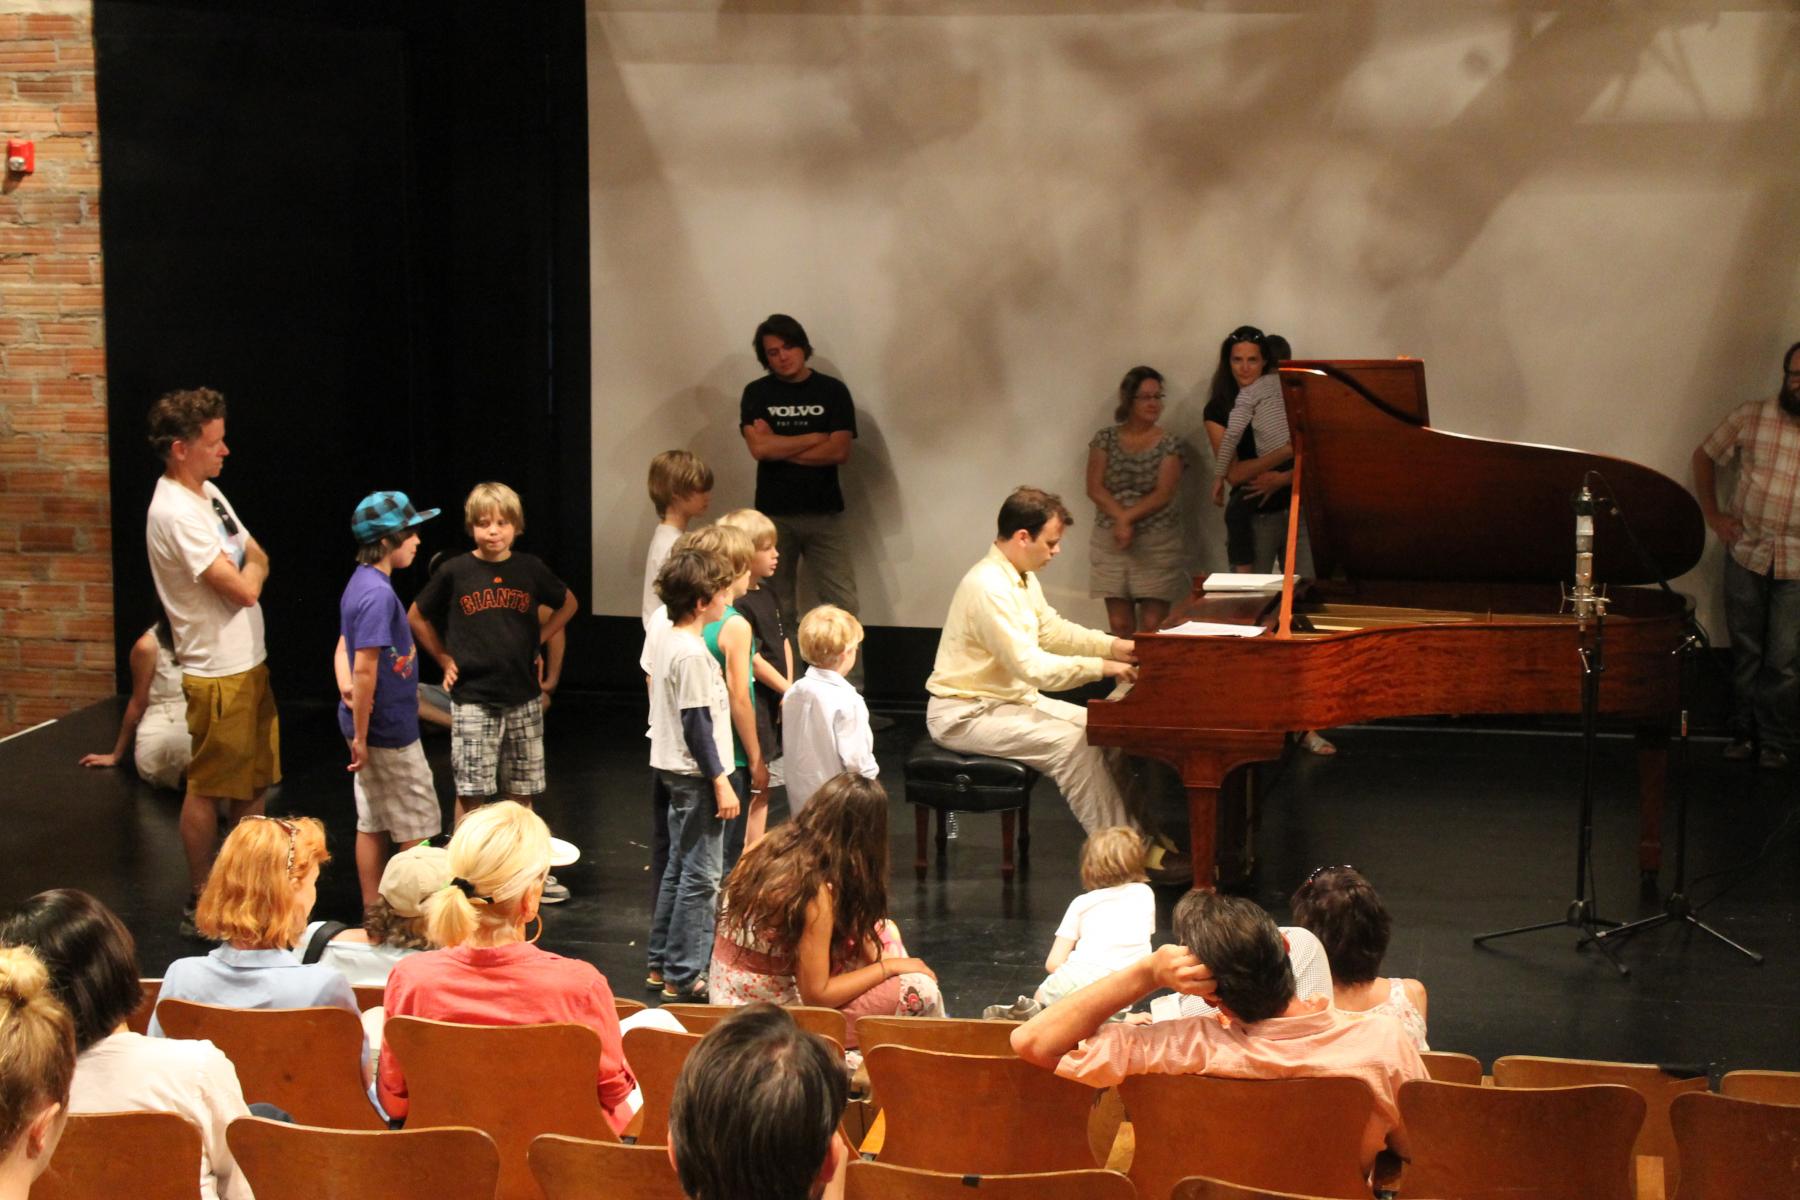 Kimball Gallagher children's concert, 1 June 2012. Photo by Jessica Brassler.